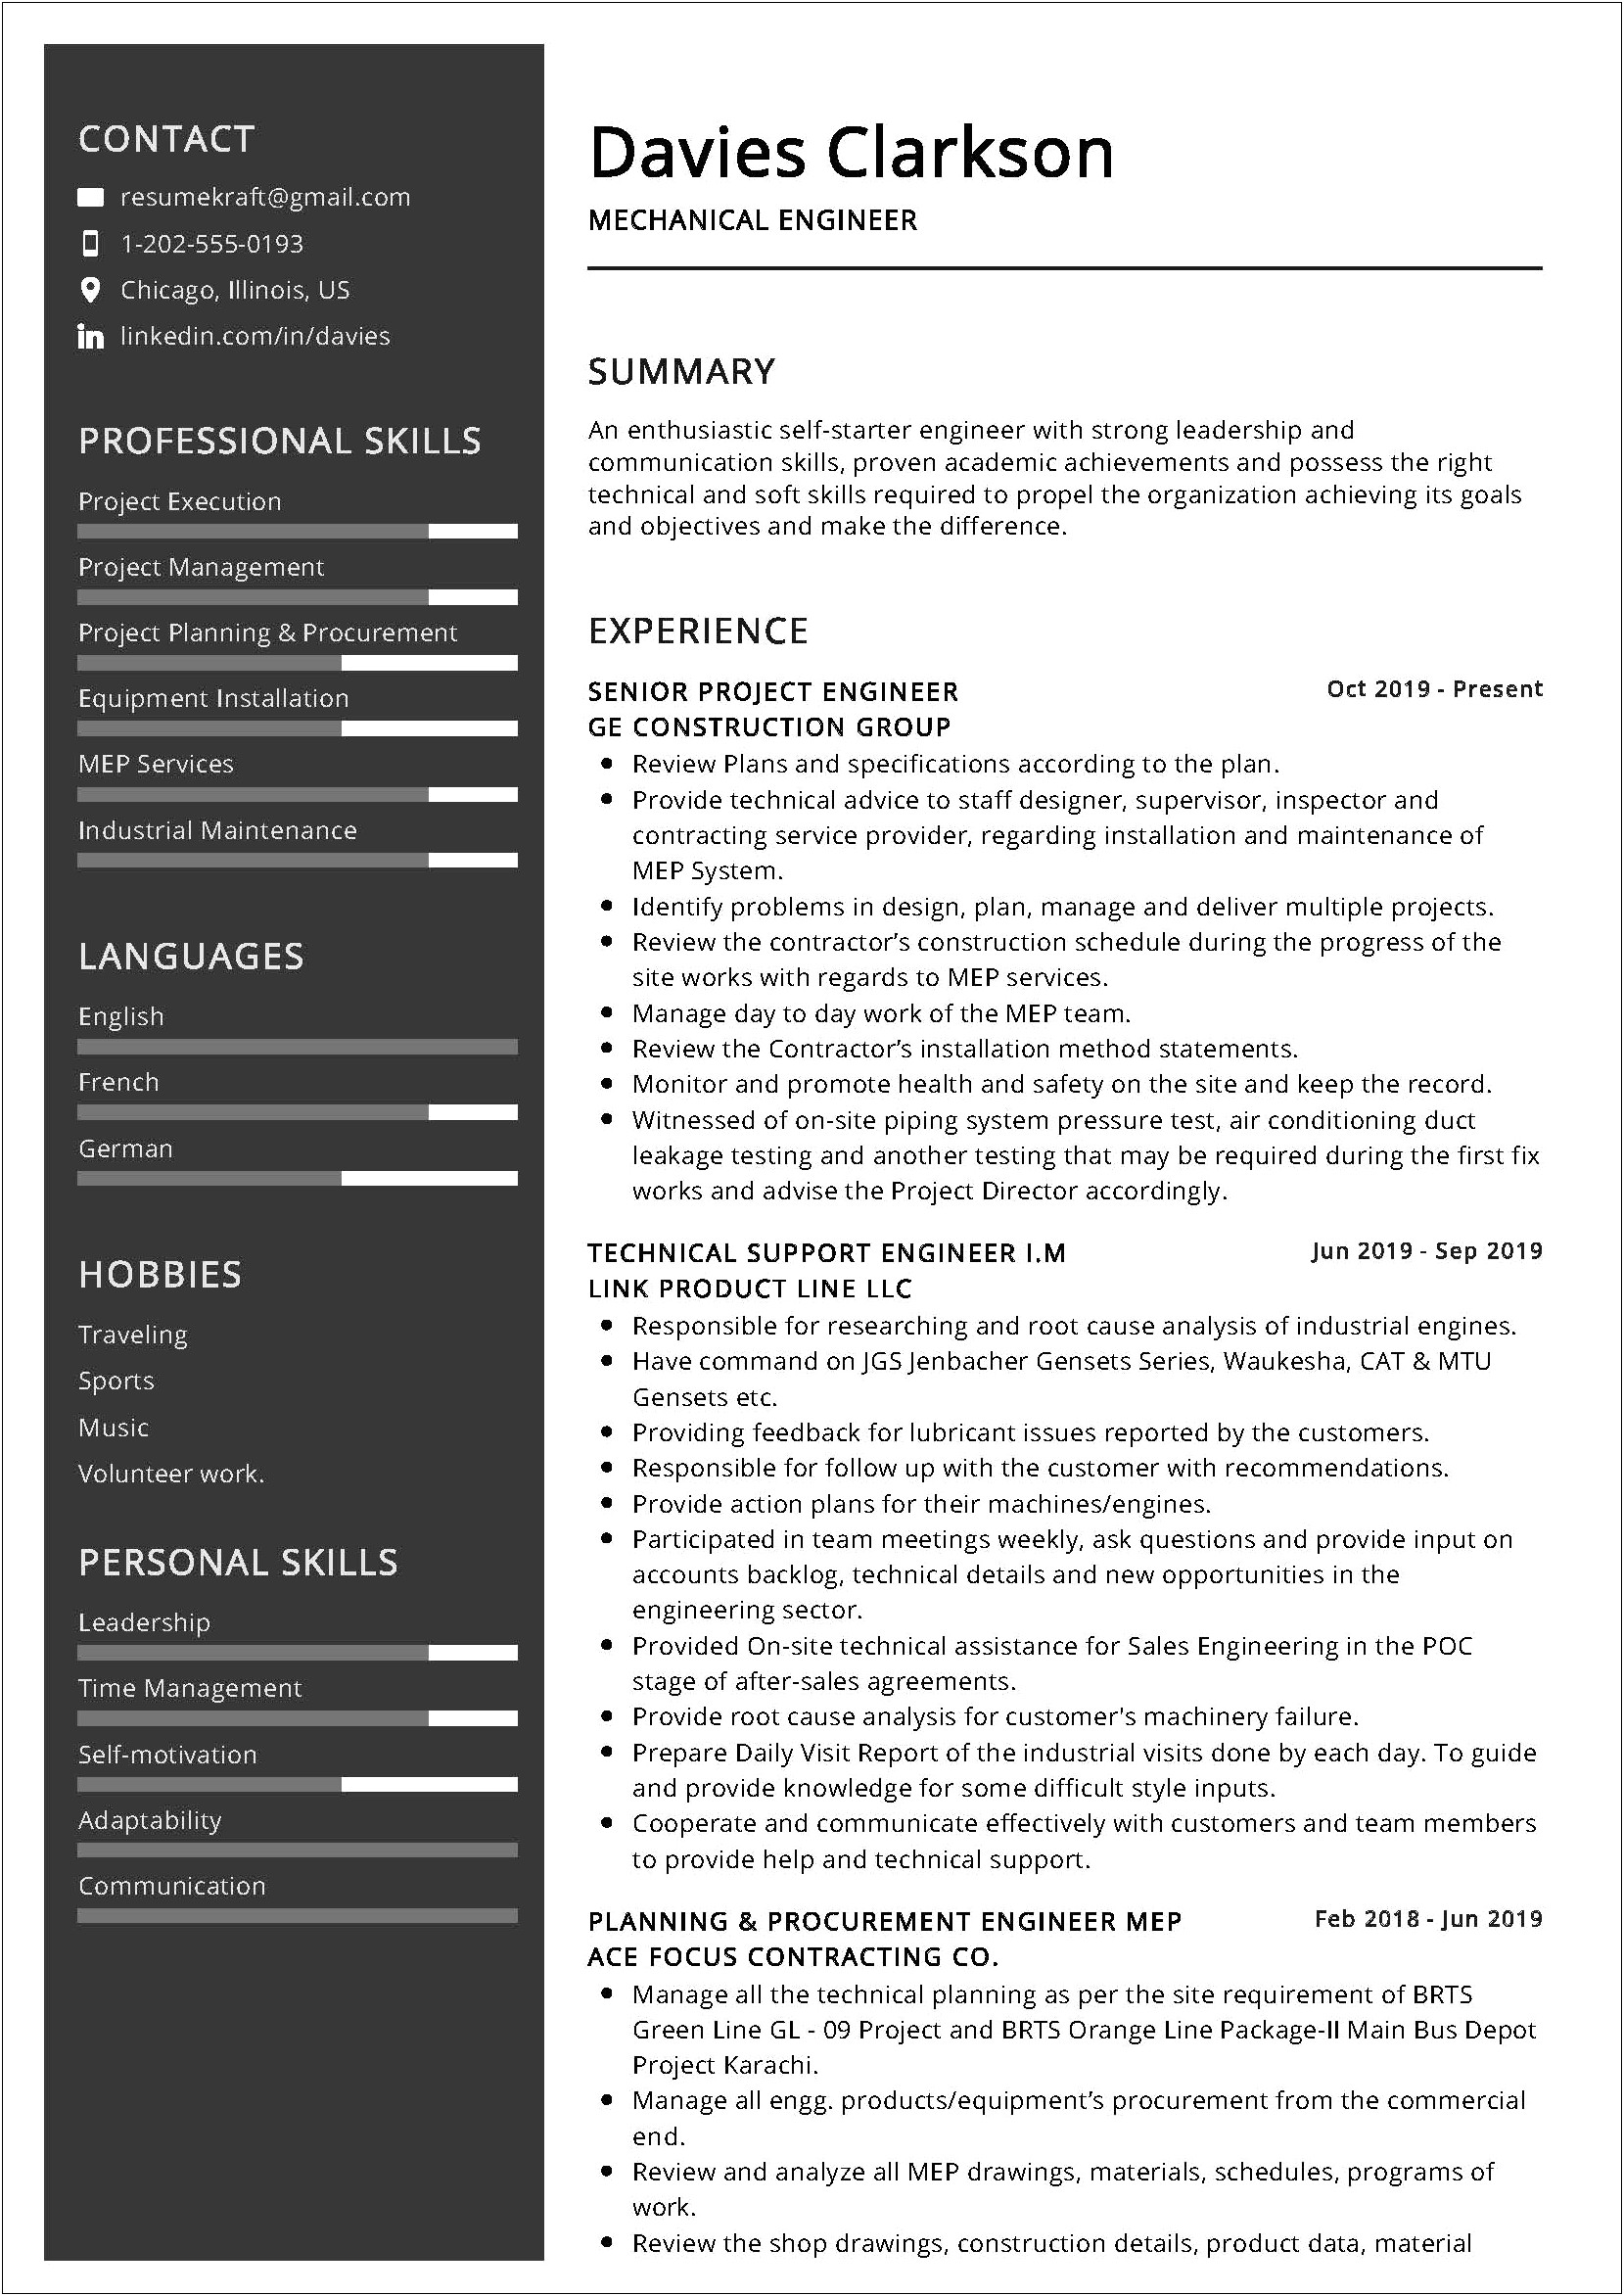 Skills Section Of Resume Mechanical Aenginer